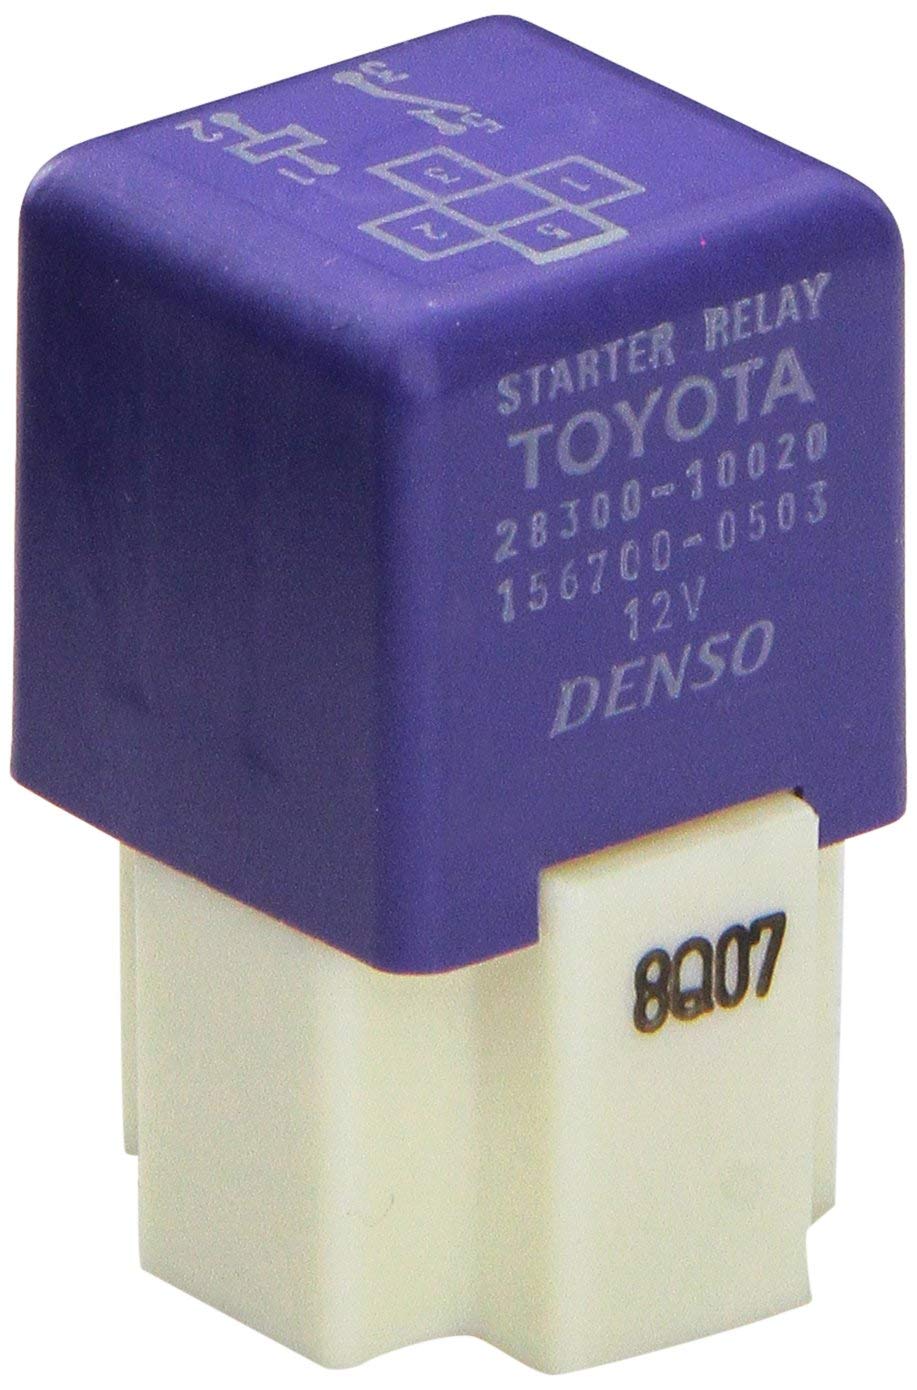 Genuine Toyota (28300-10020) Starter Relay Assembly